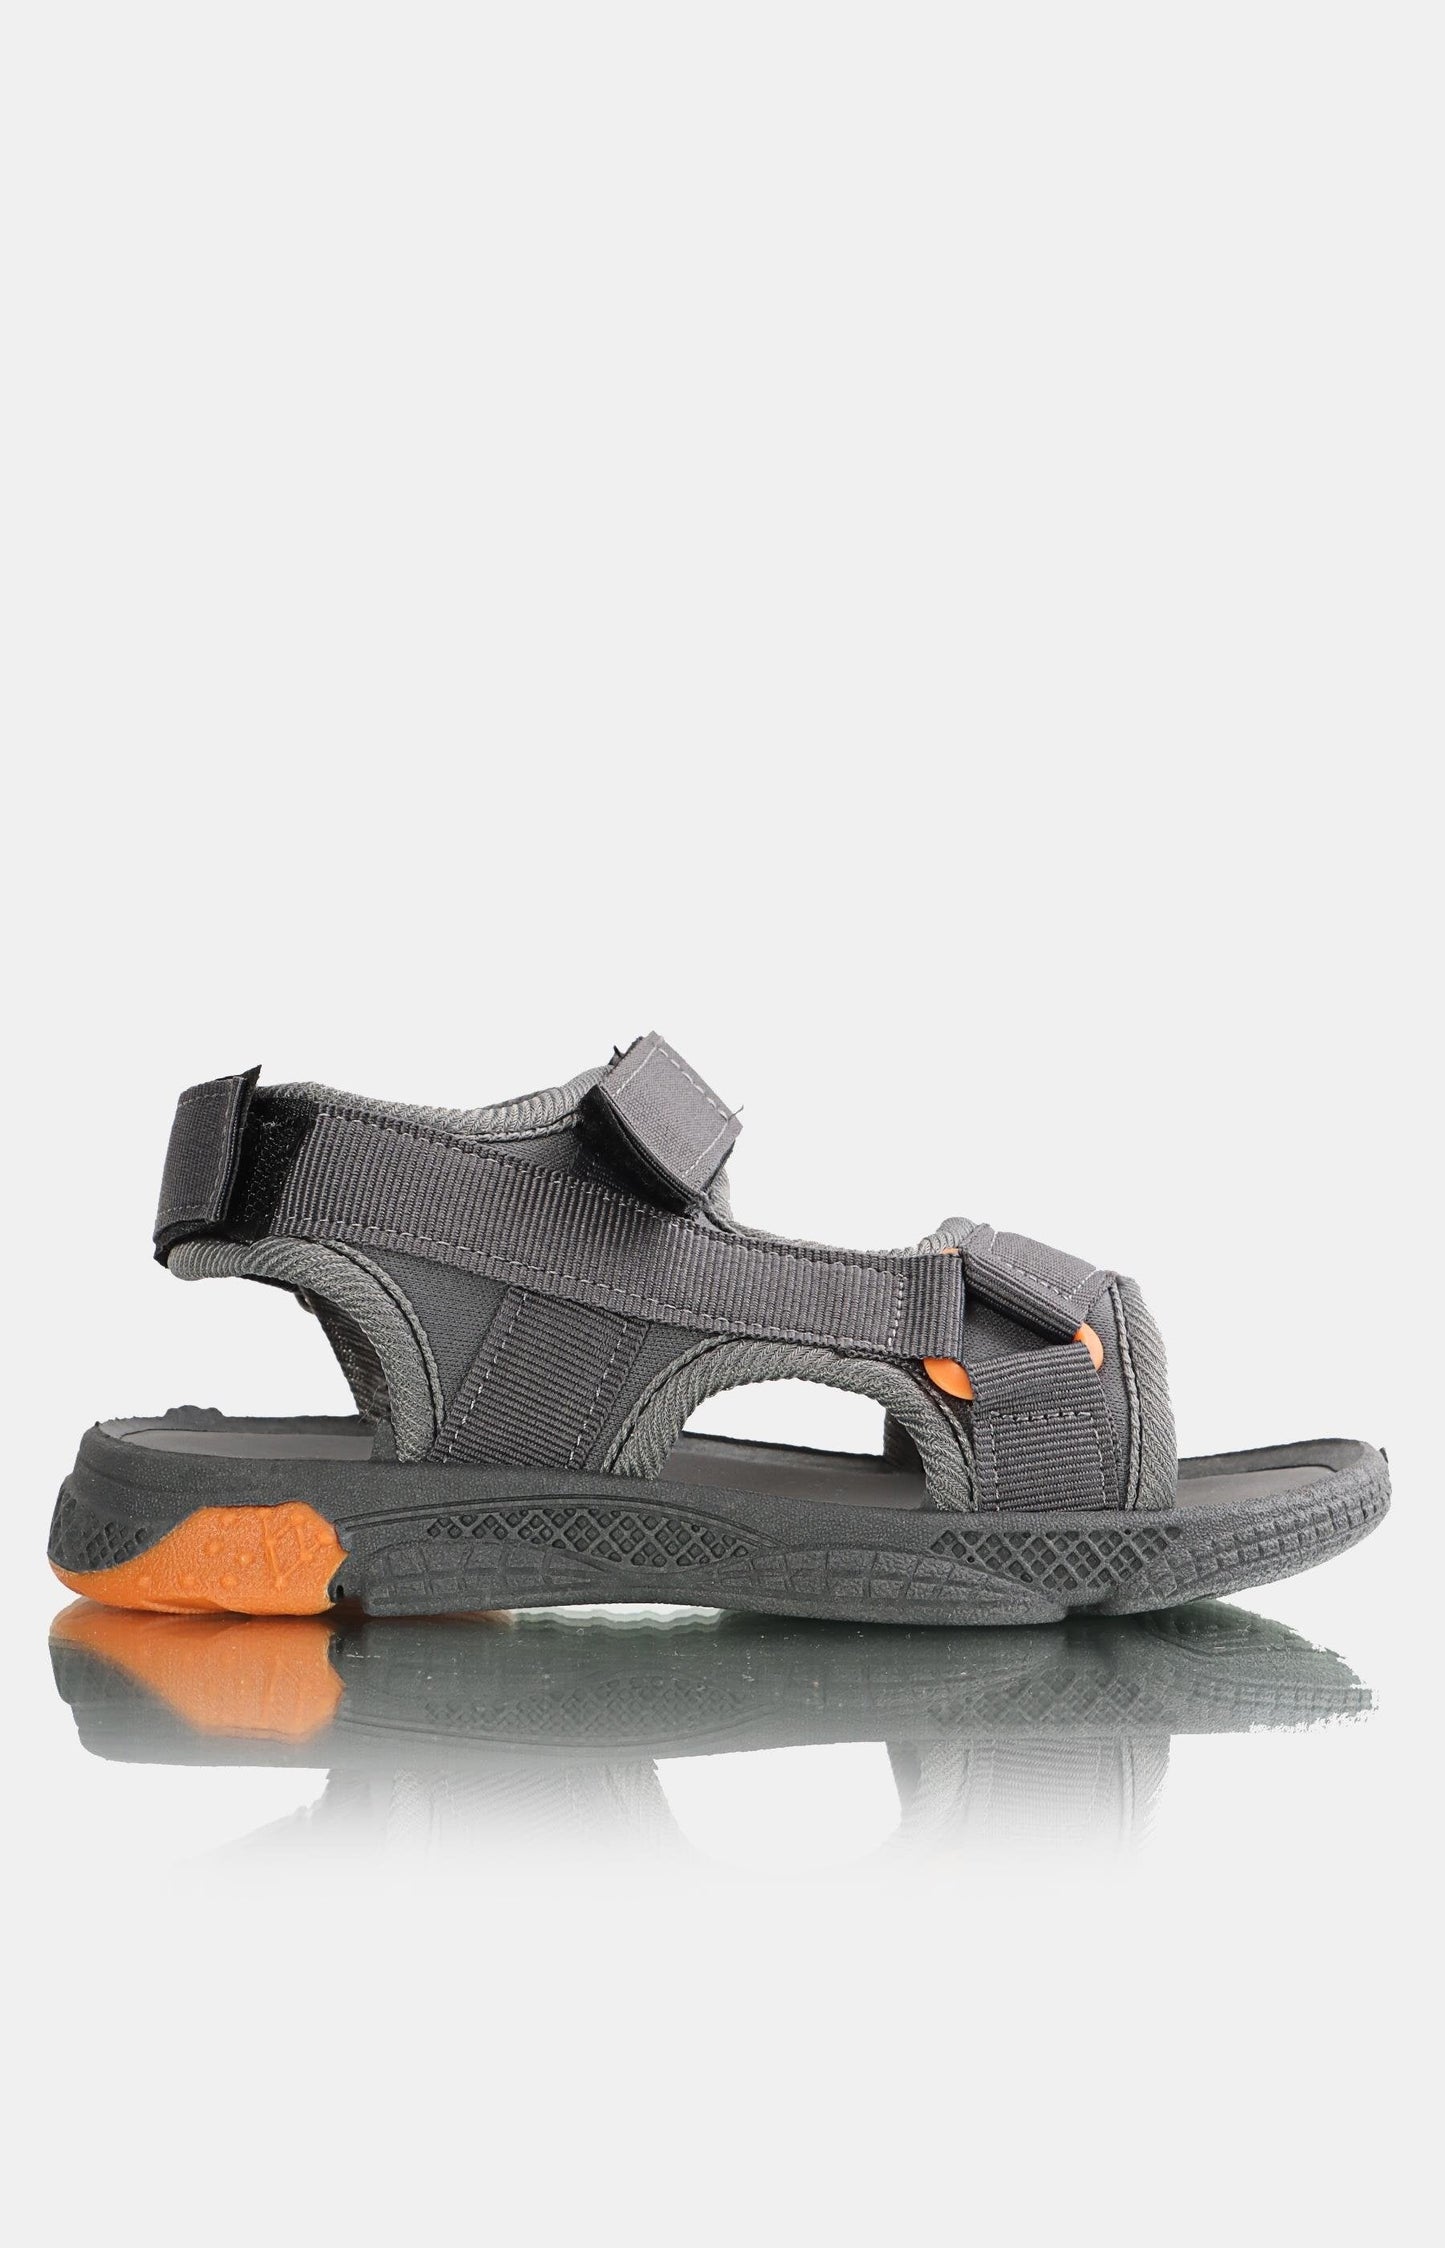 Boys Velcro Sandals - Grey-Orange